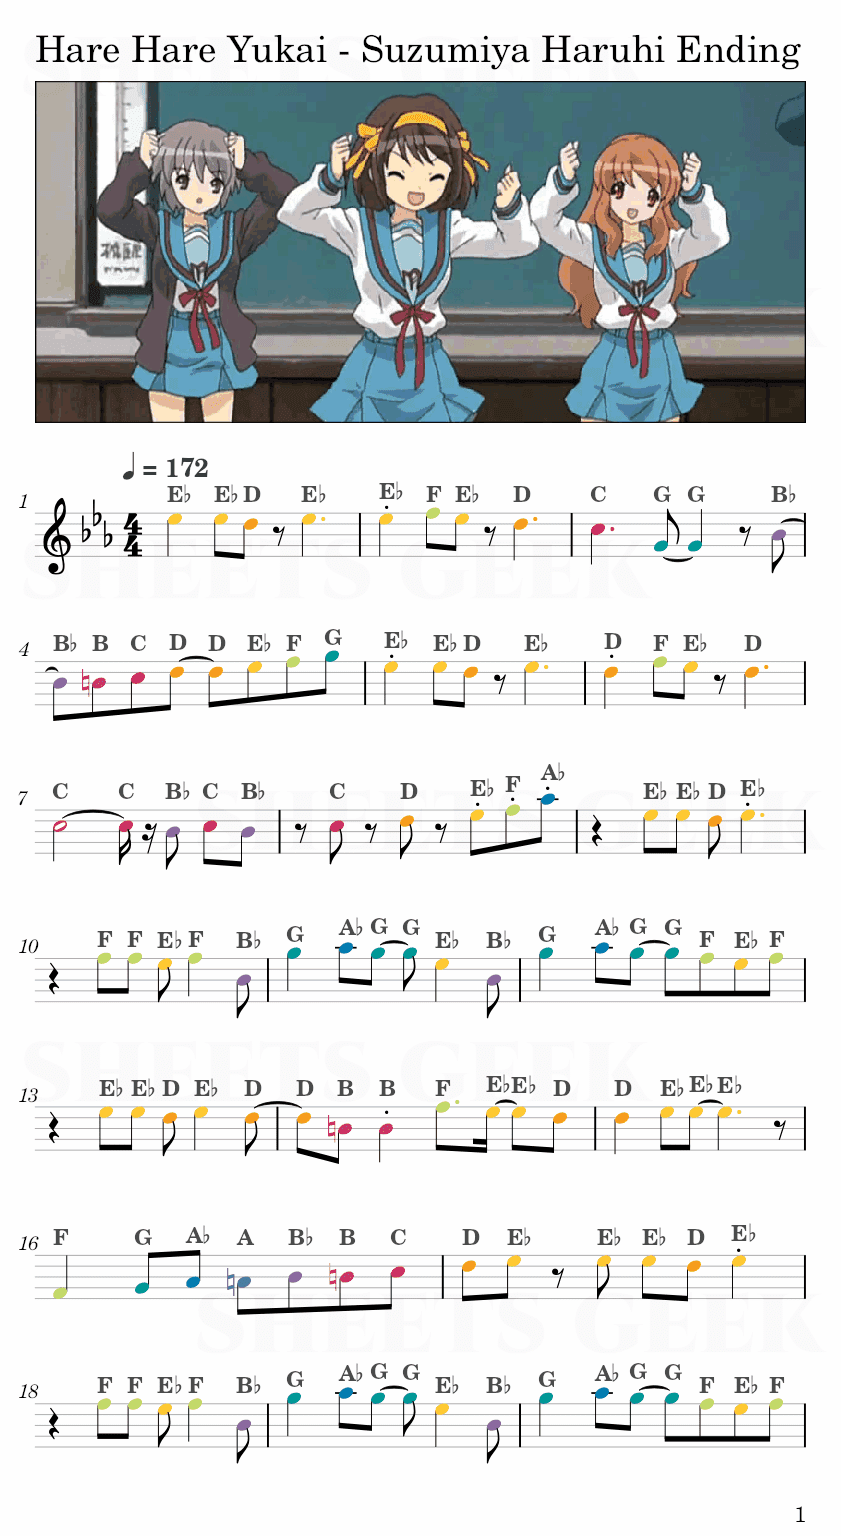 Hare Hare Yukai - Suzumiya Haruhi Ending Easy Sheet Music Free for piano, keyboard, flute, violin, sax, cello page 1